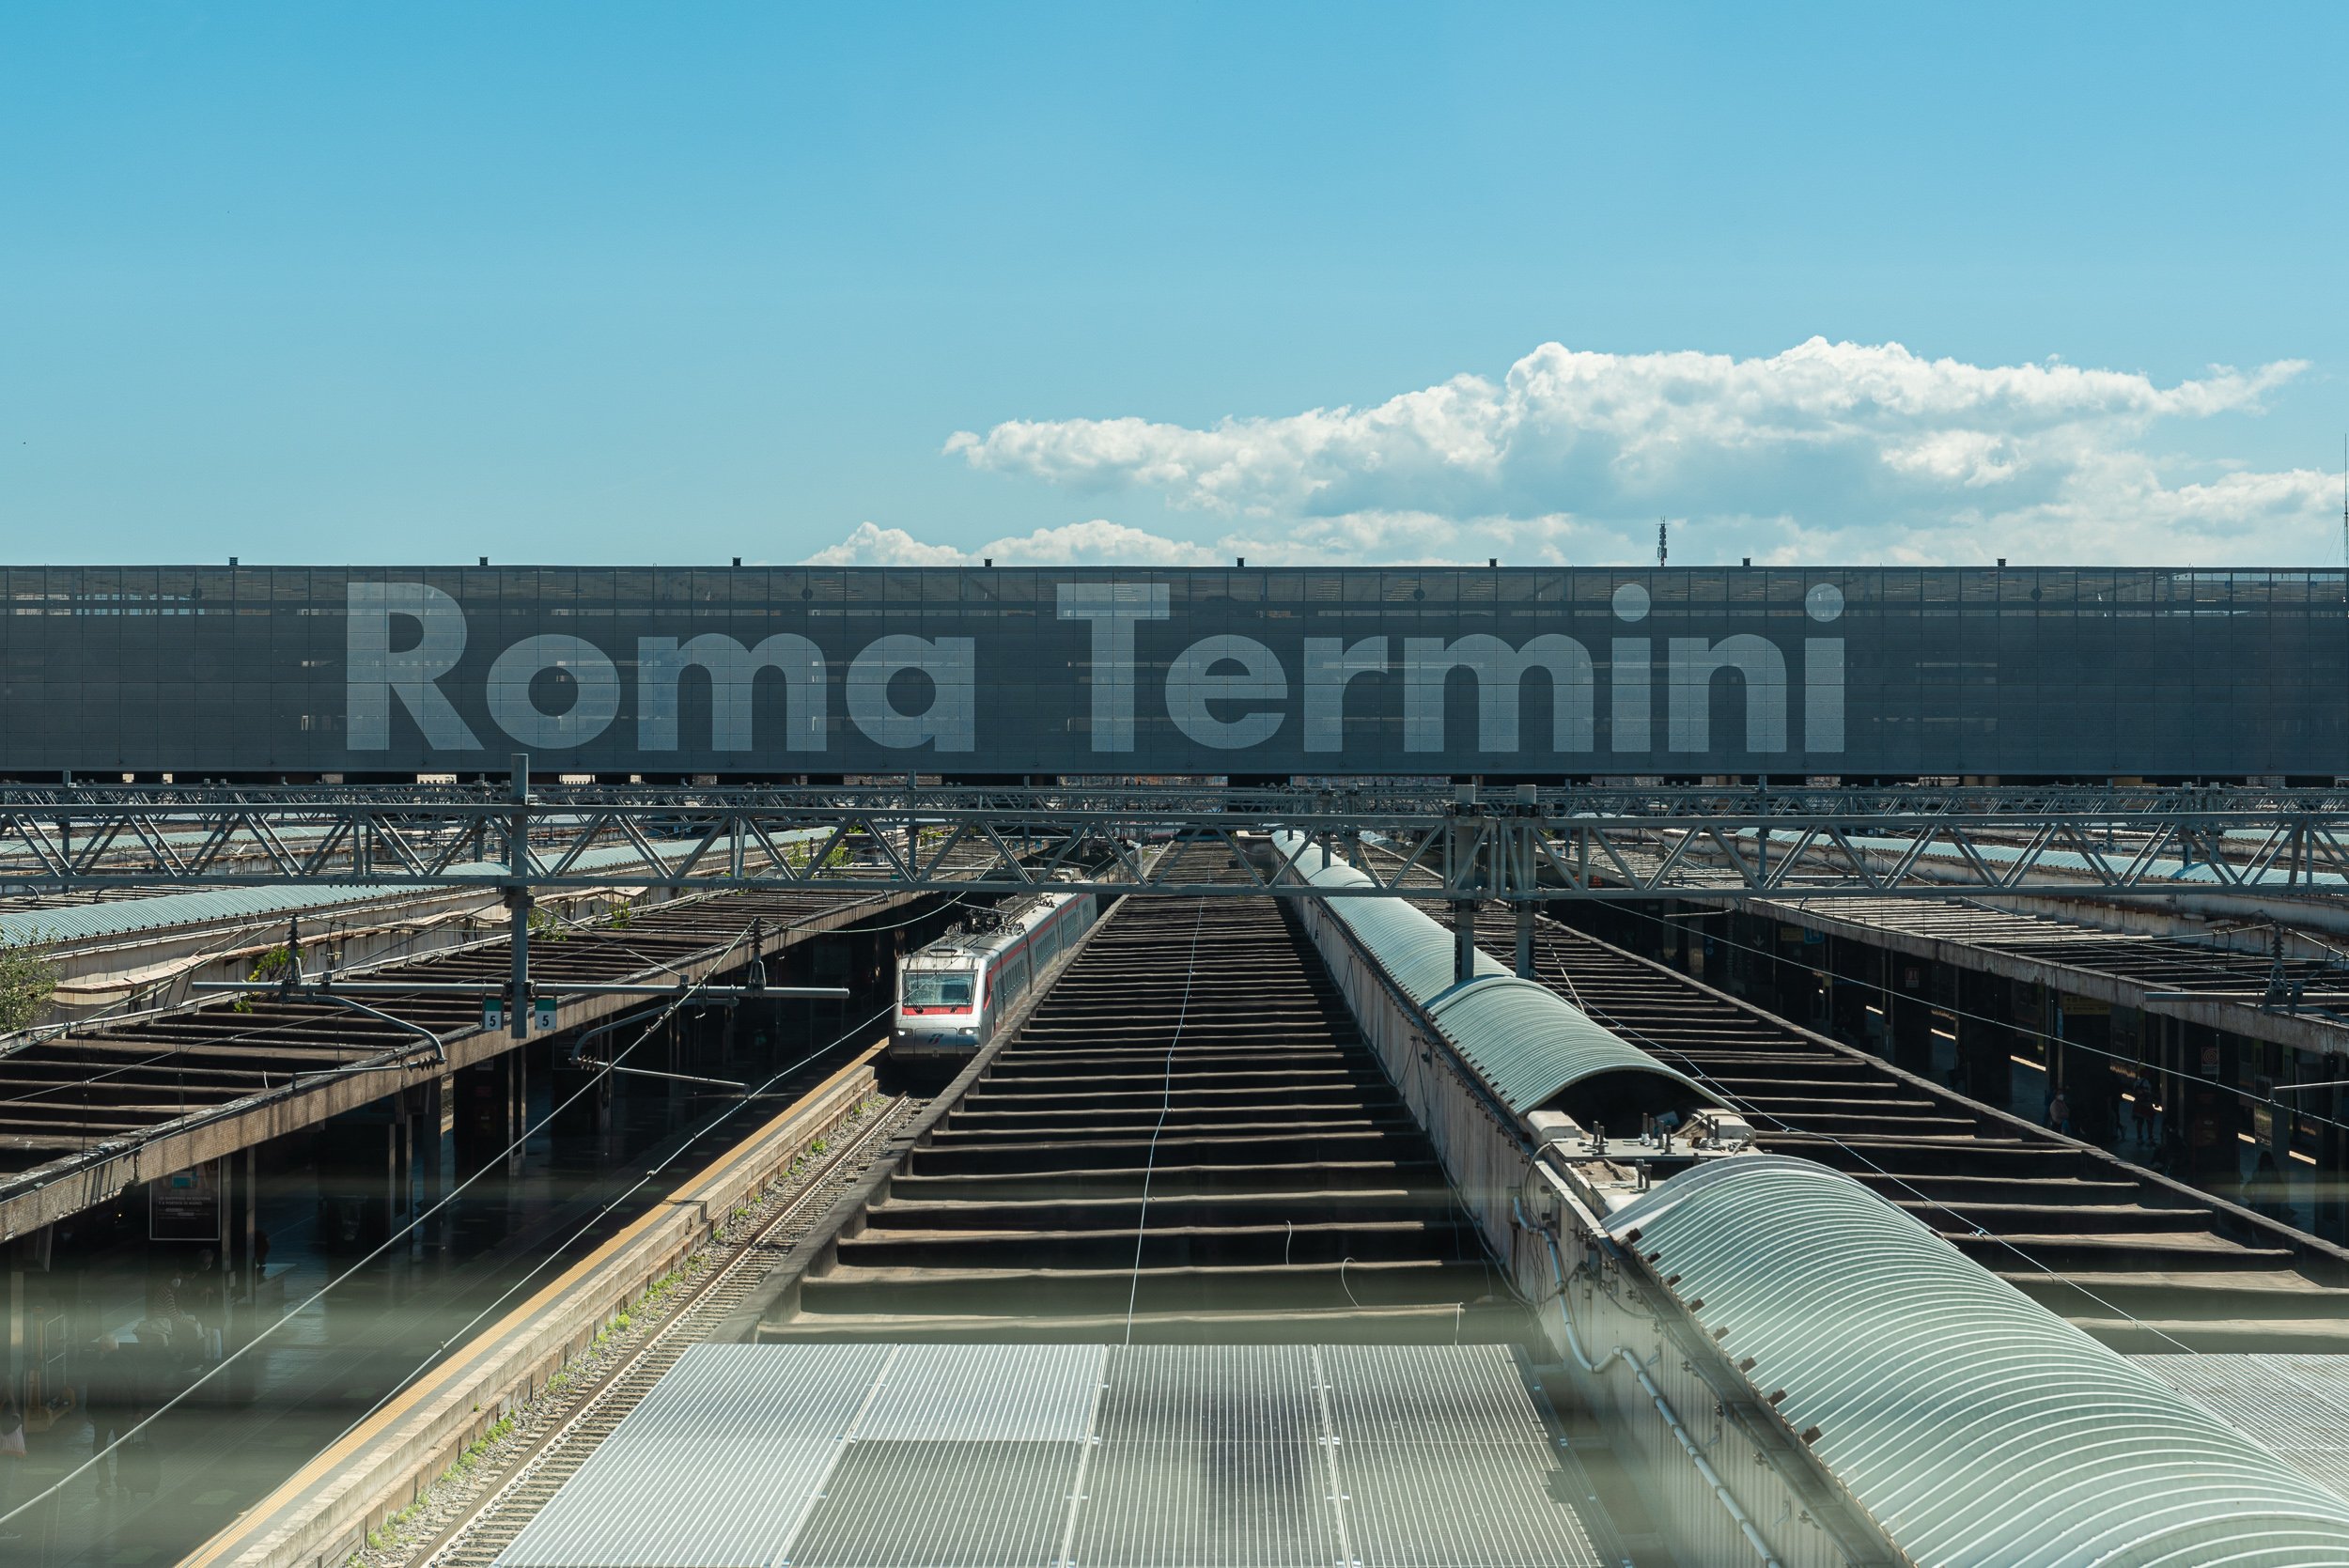 7 Hills of Rome - Termini Station